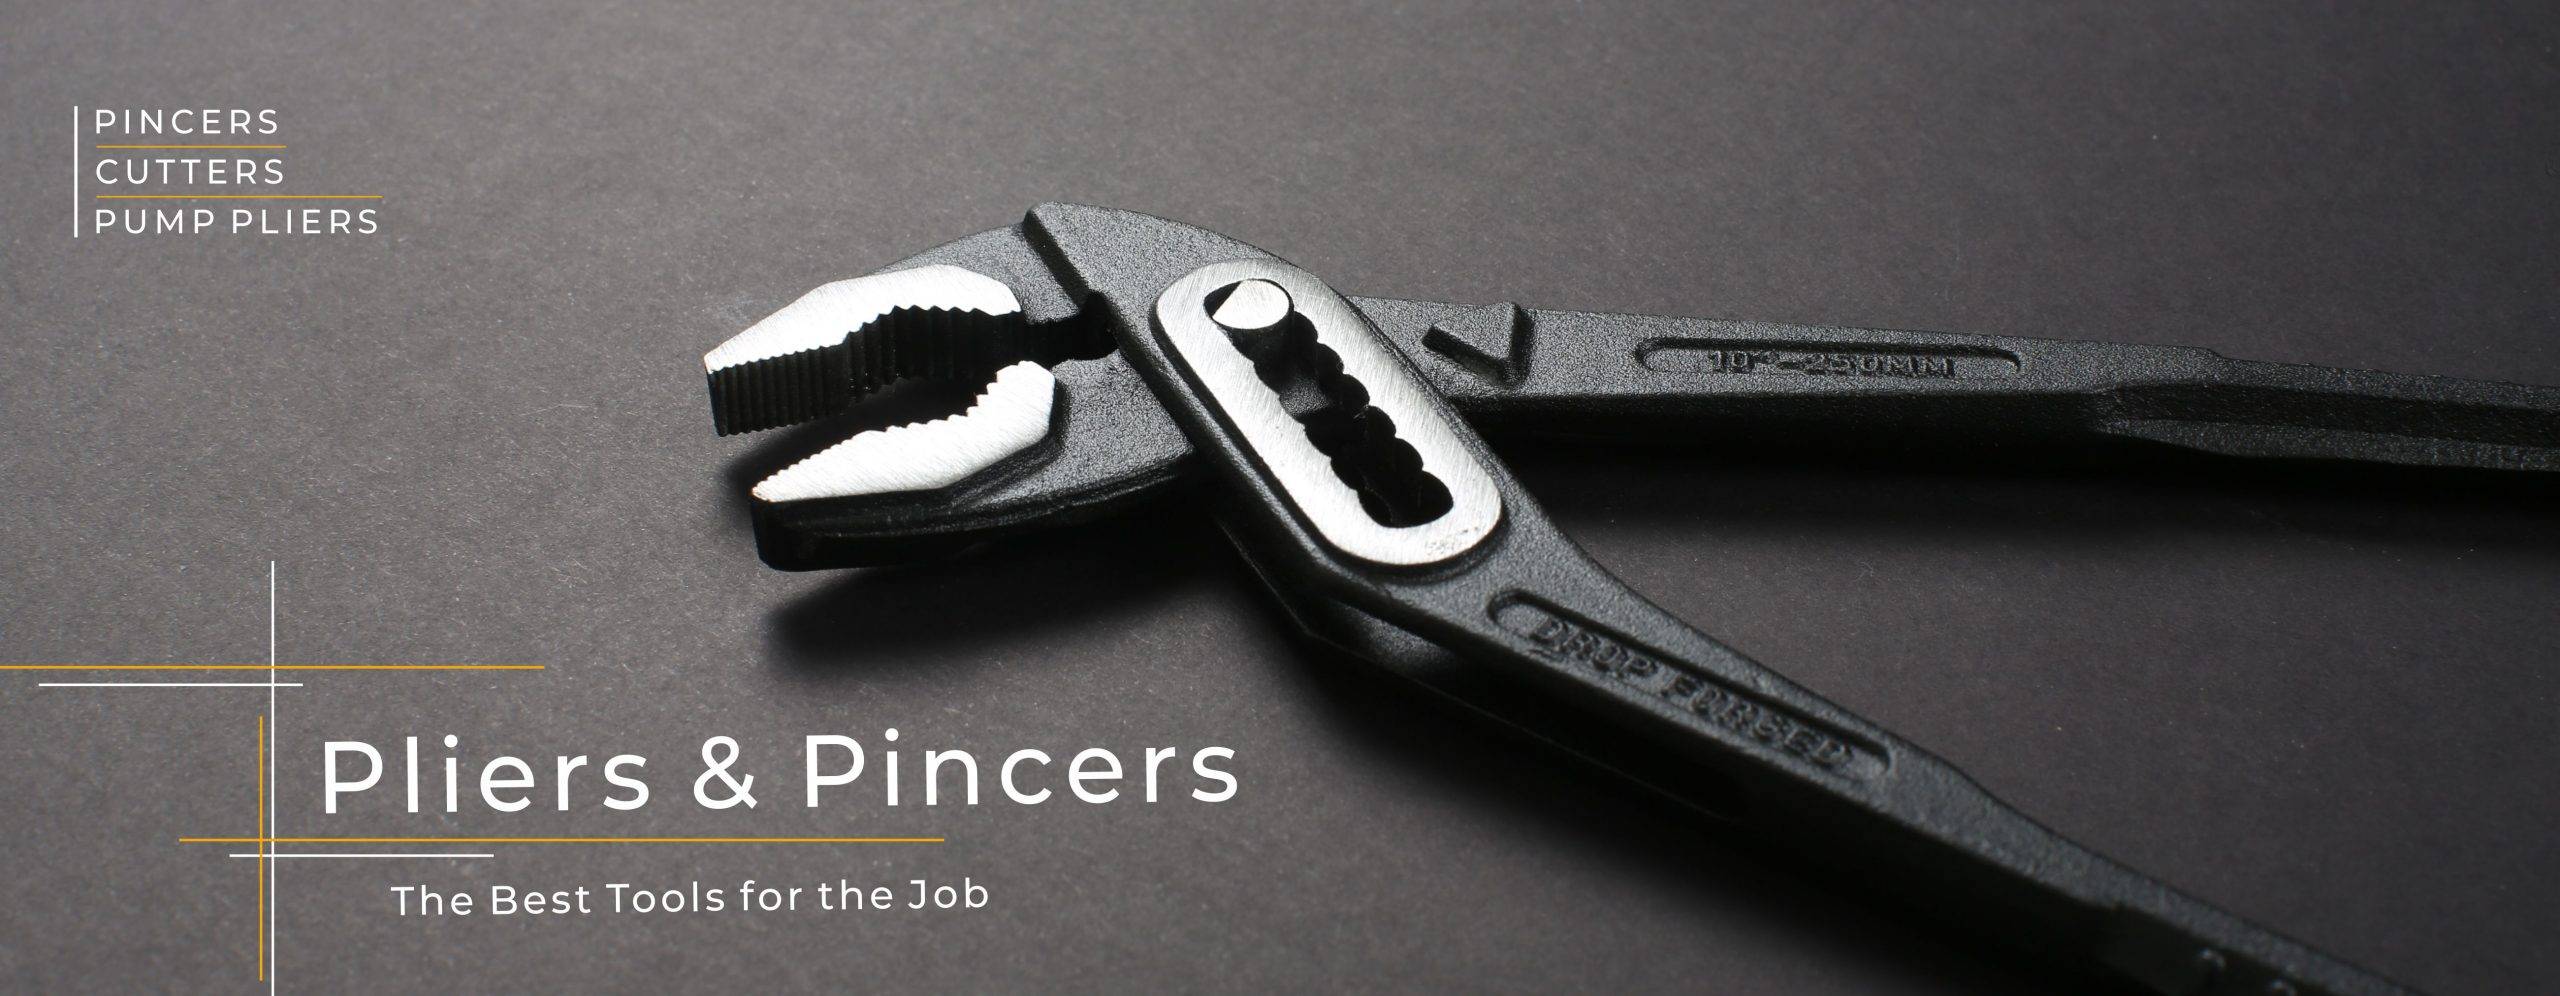 Pliers & Pincers Banner Image - JCBL